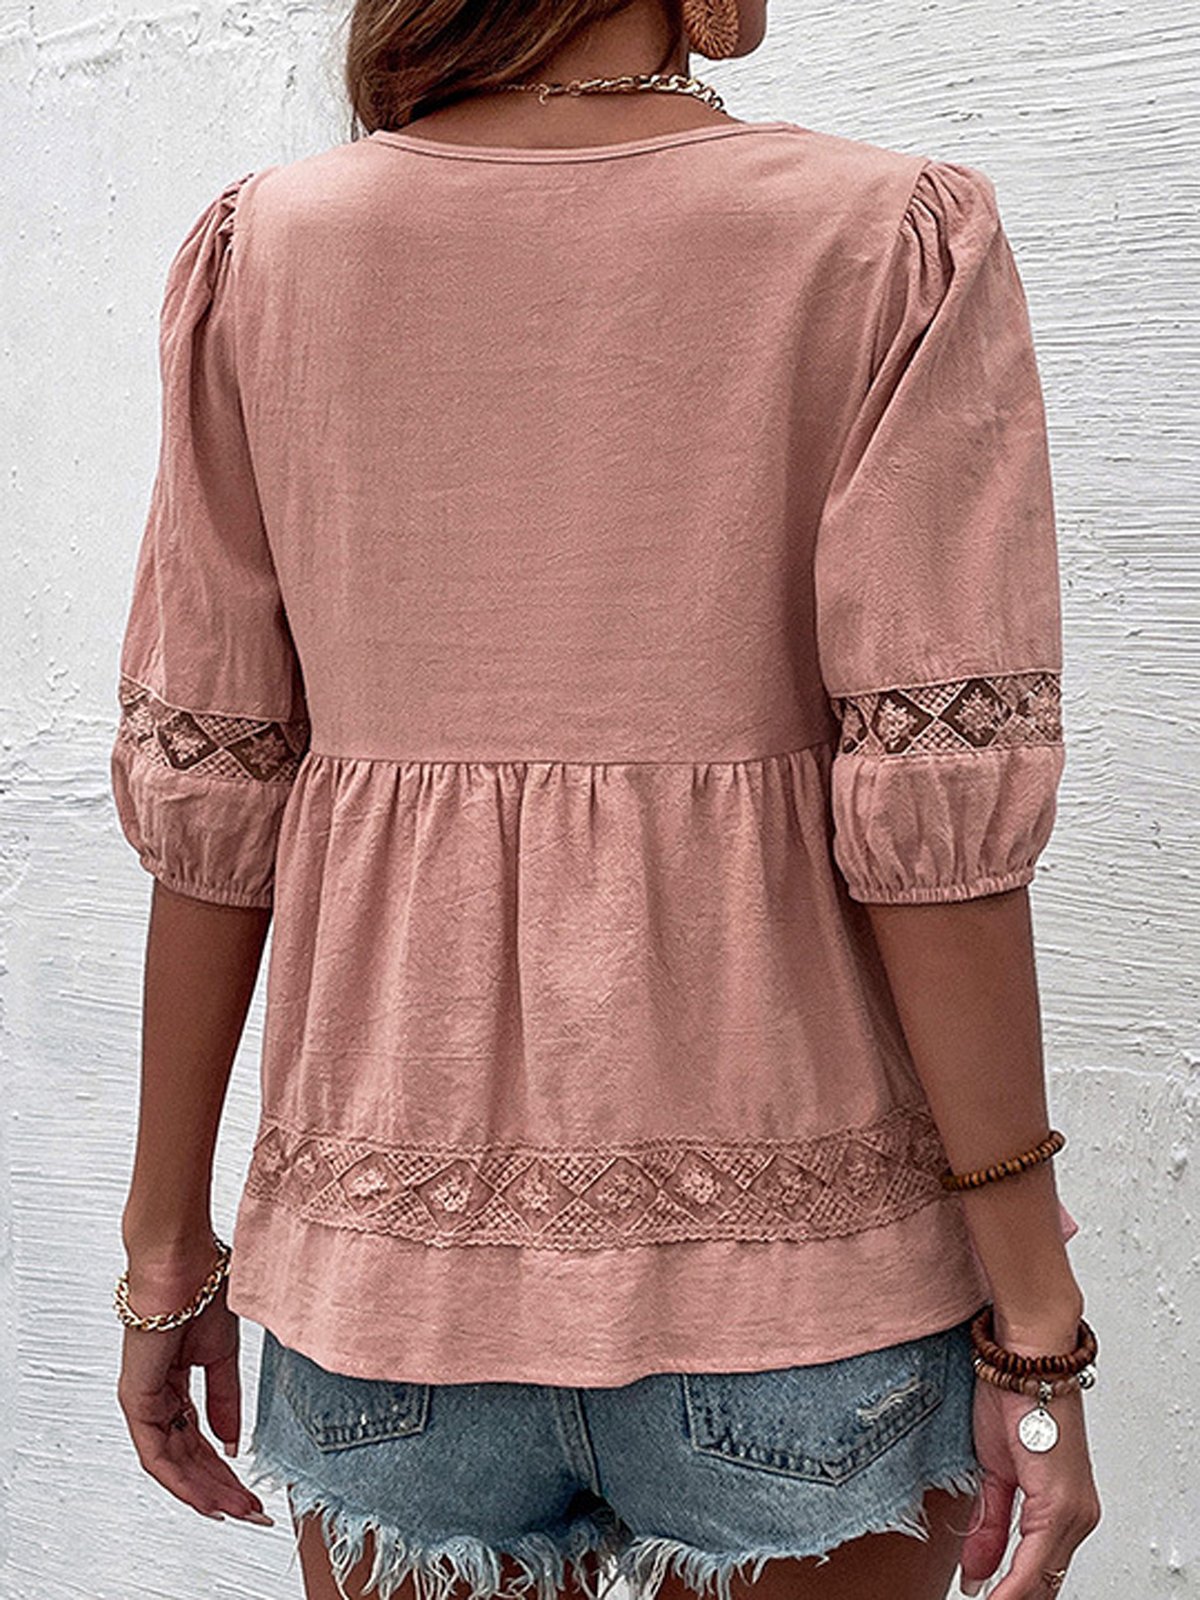 V Neck Short Sleeve Plain Lace Regular Loose Shirt For Women